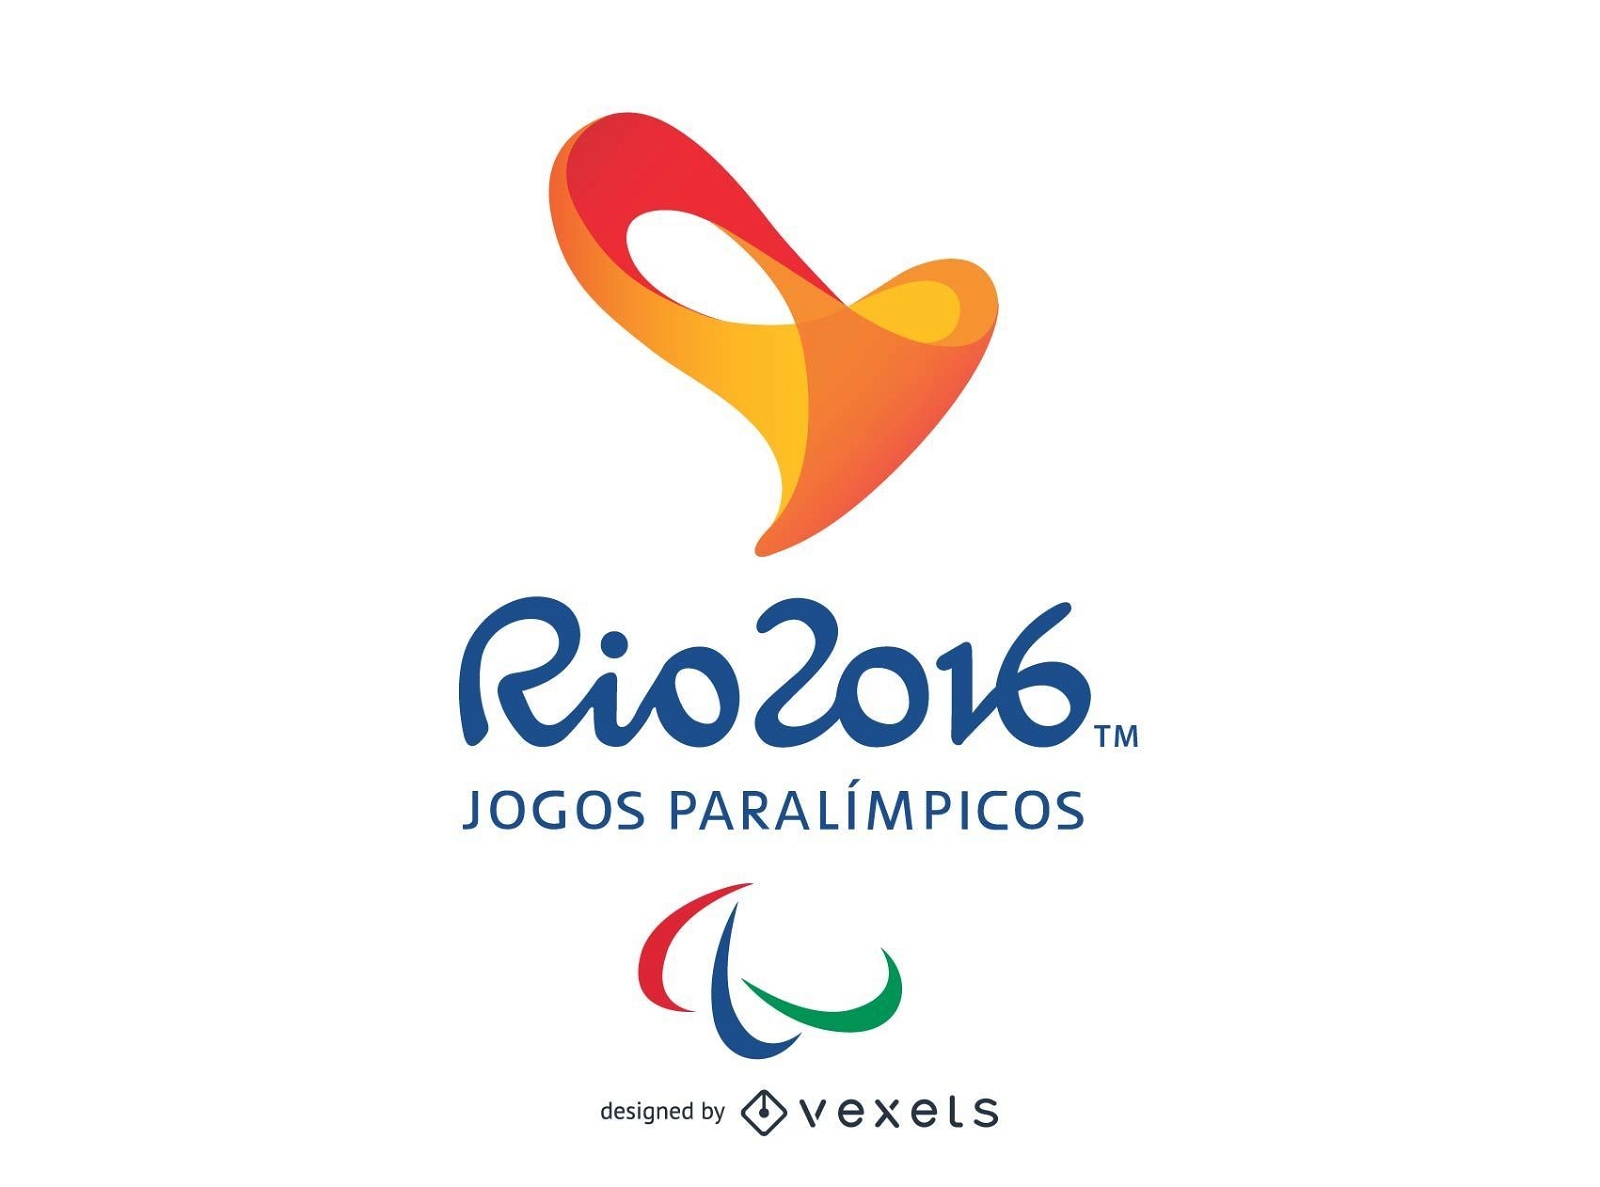 Jogos Paraolímpicos Rio 2016